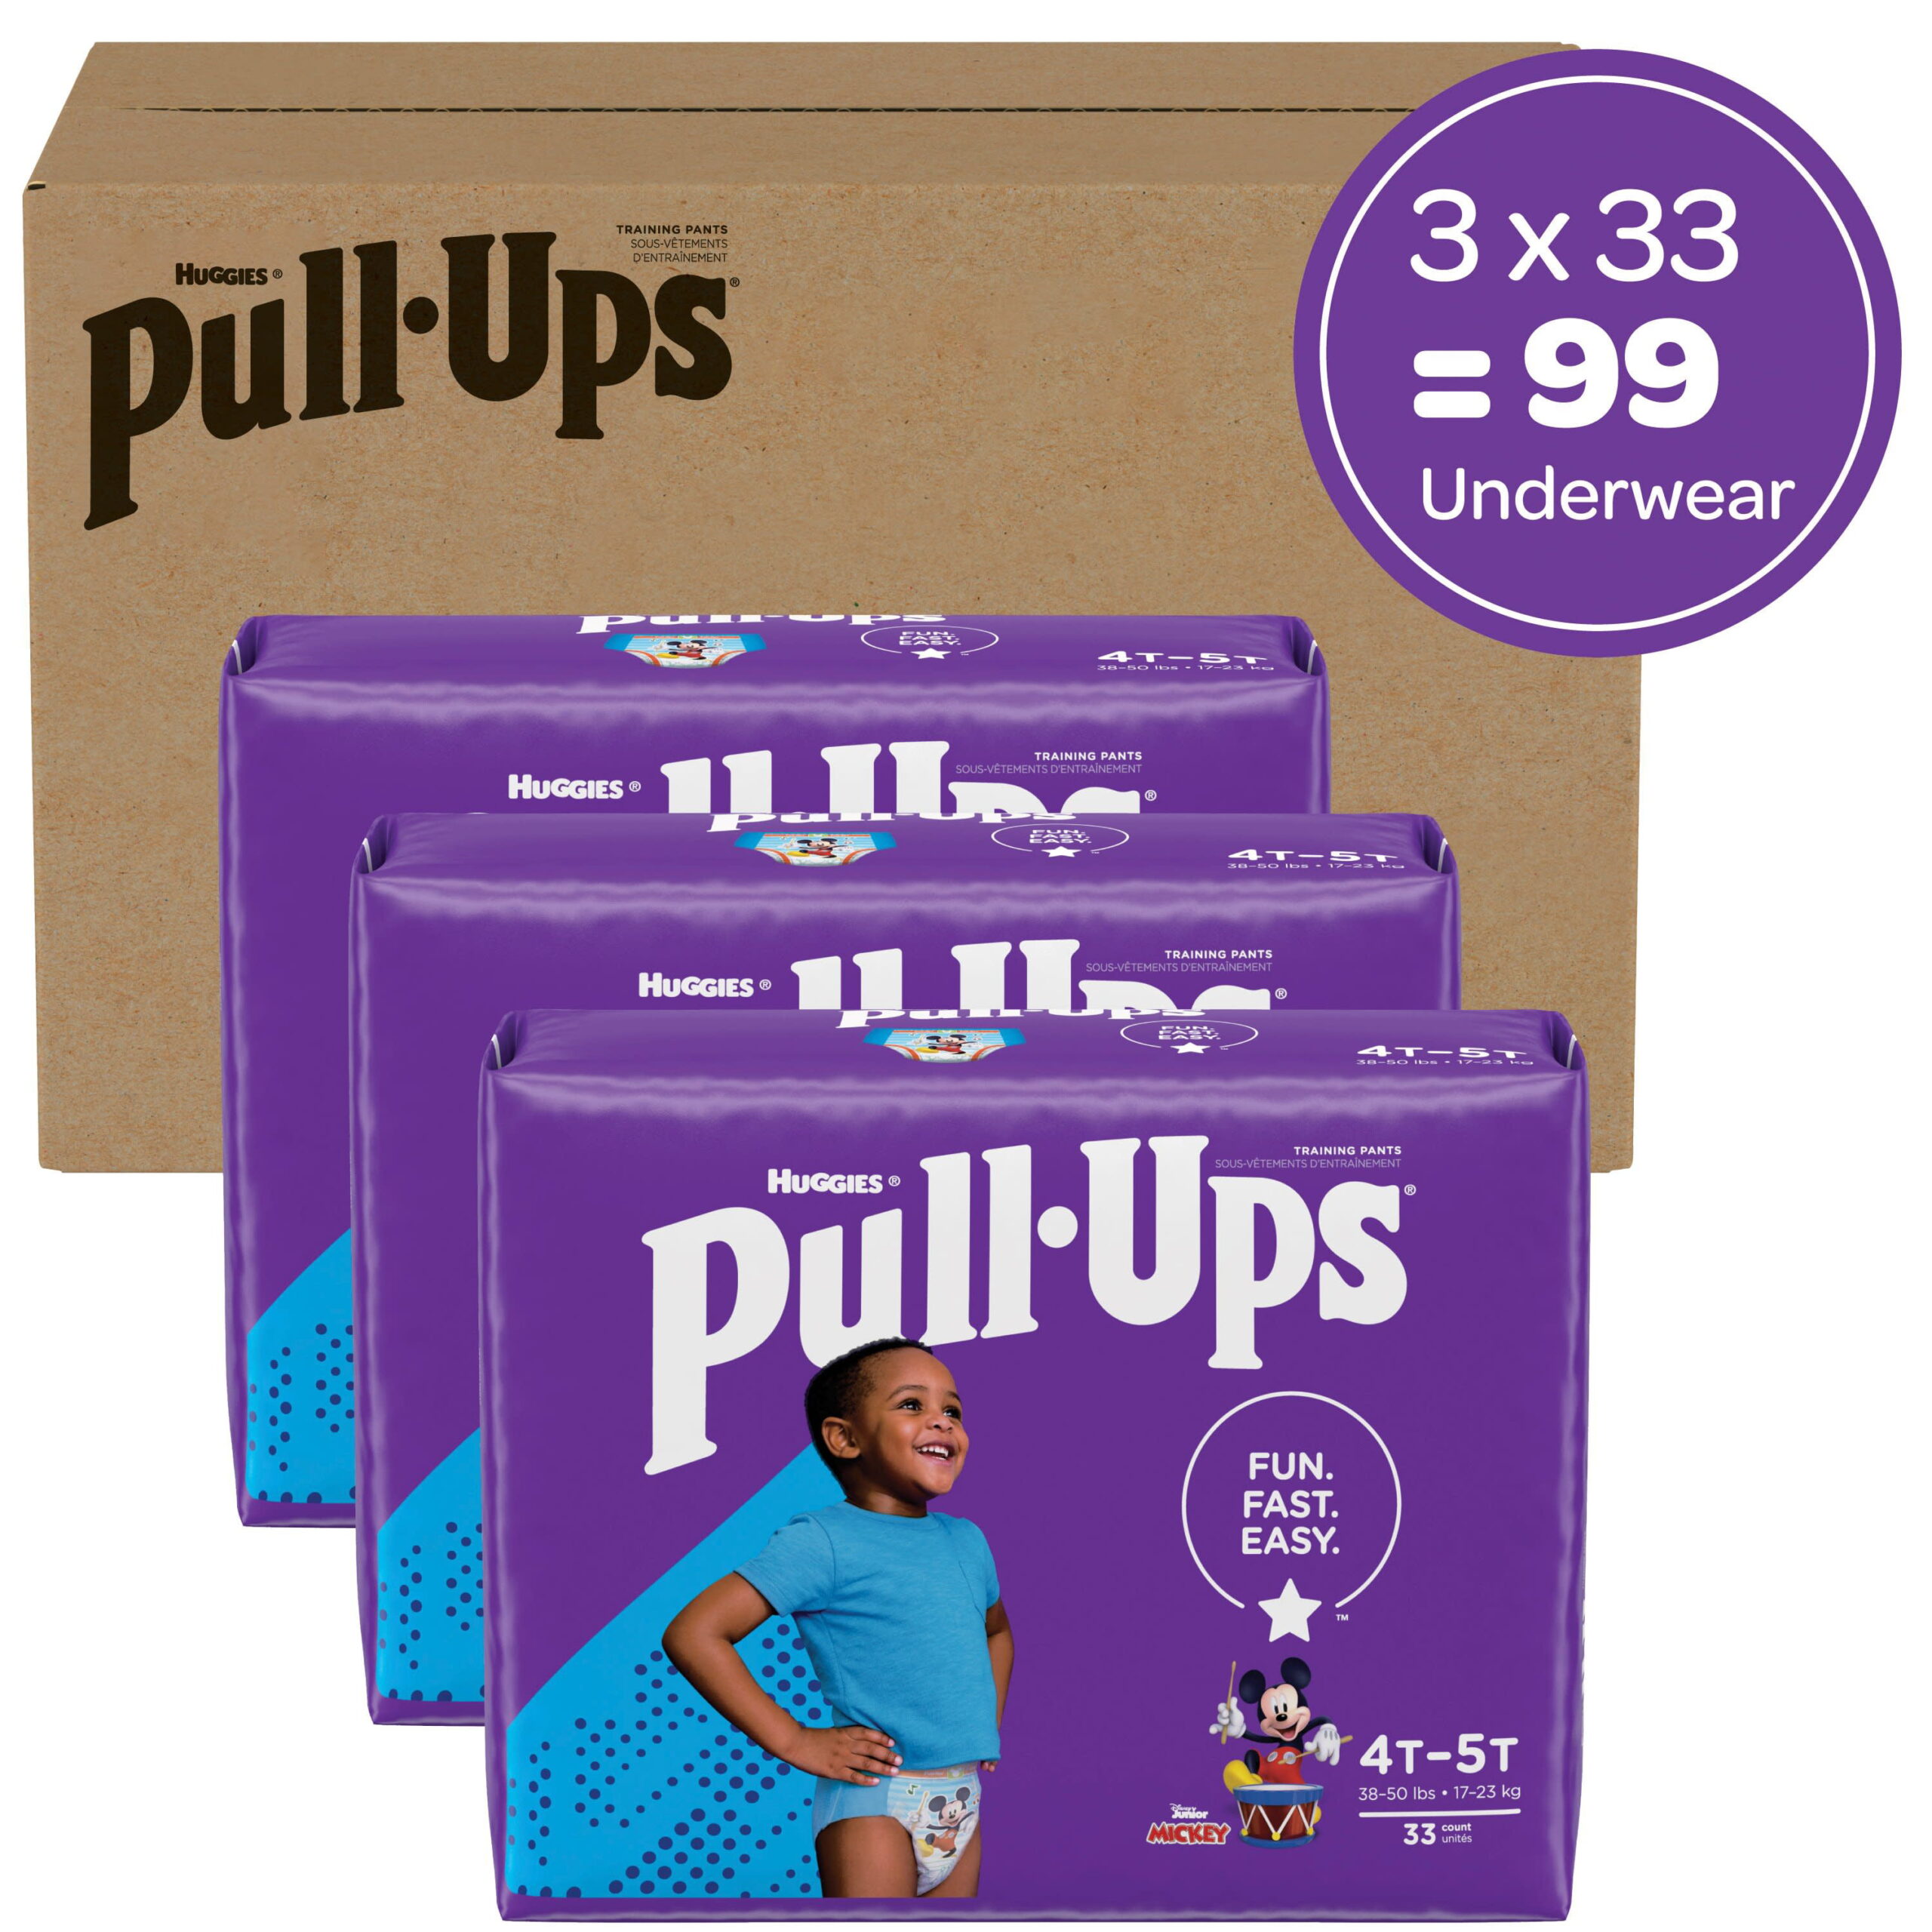 Huggies Pull-Ups Plus, Boys Training Pants 4T-5T (38-50 lb/17-23